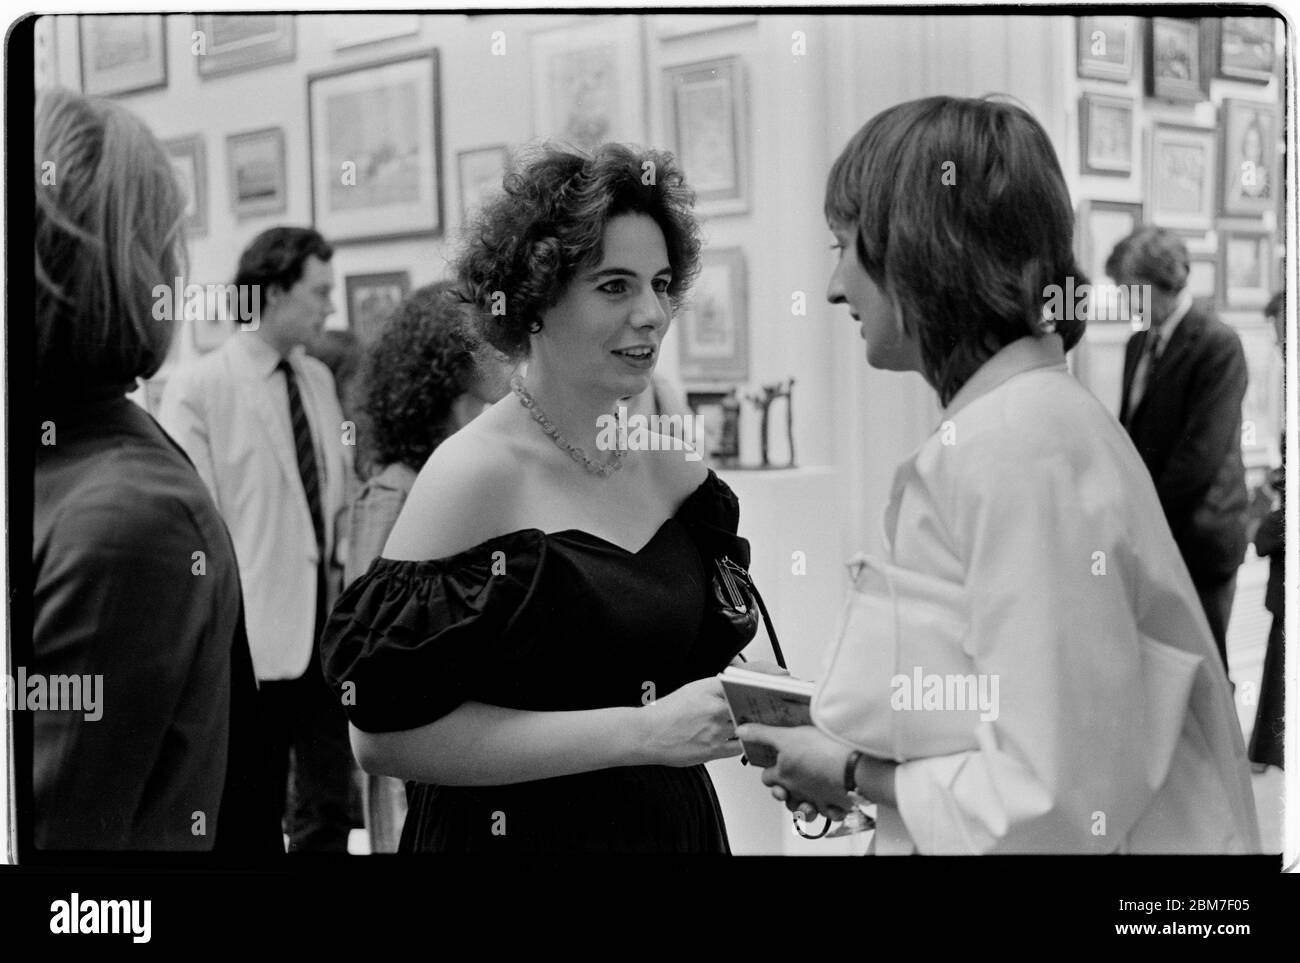 Royal Academy Summer Show opening evening 1984, London England Stock Photo